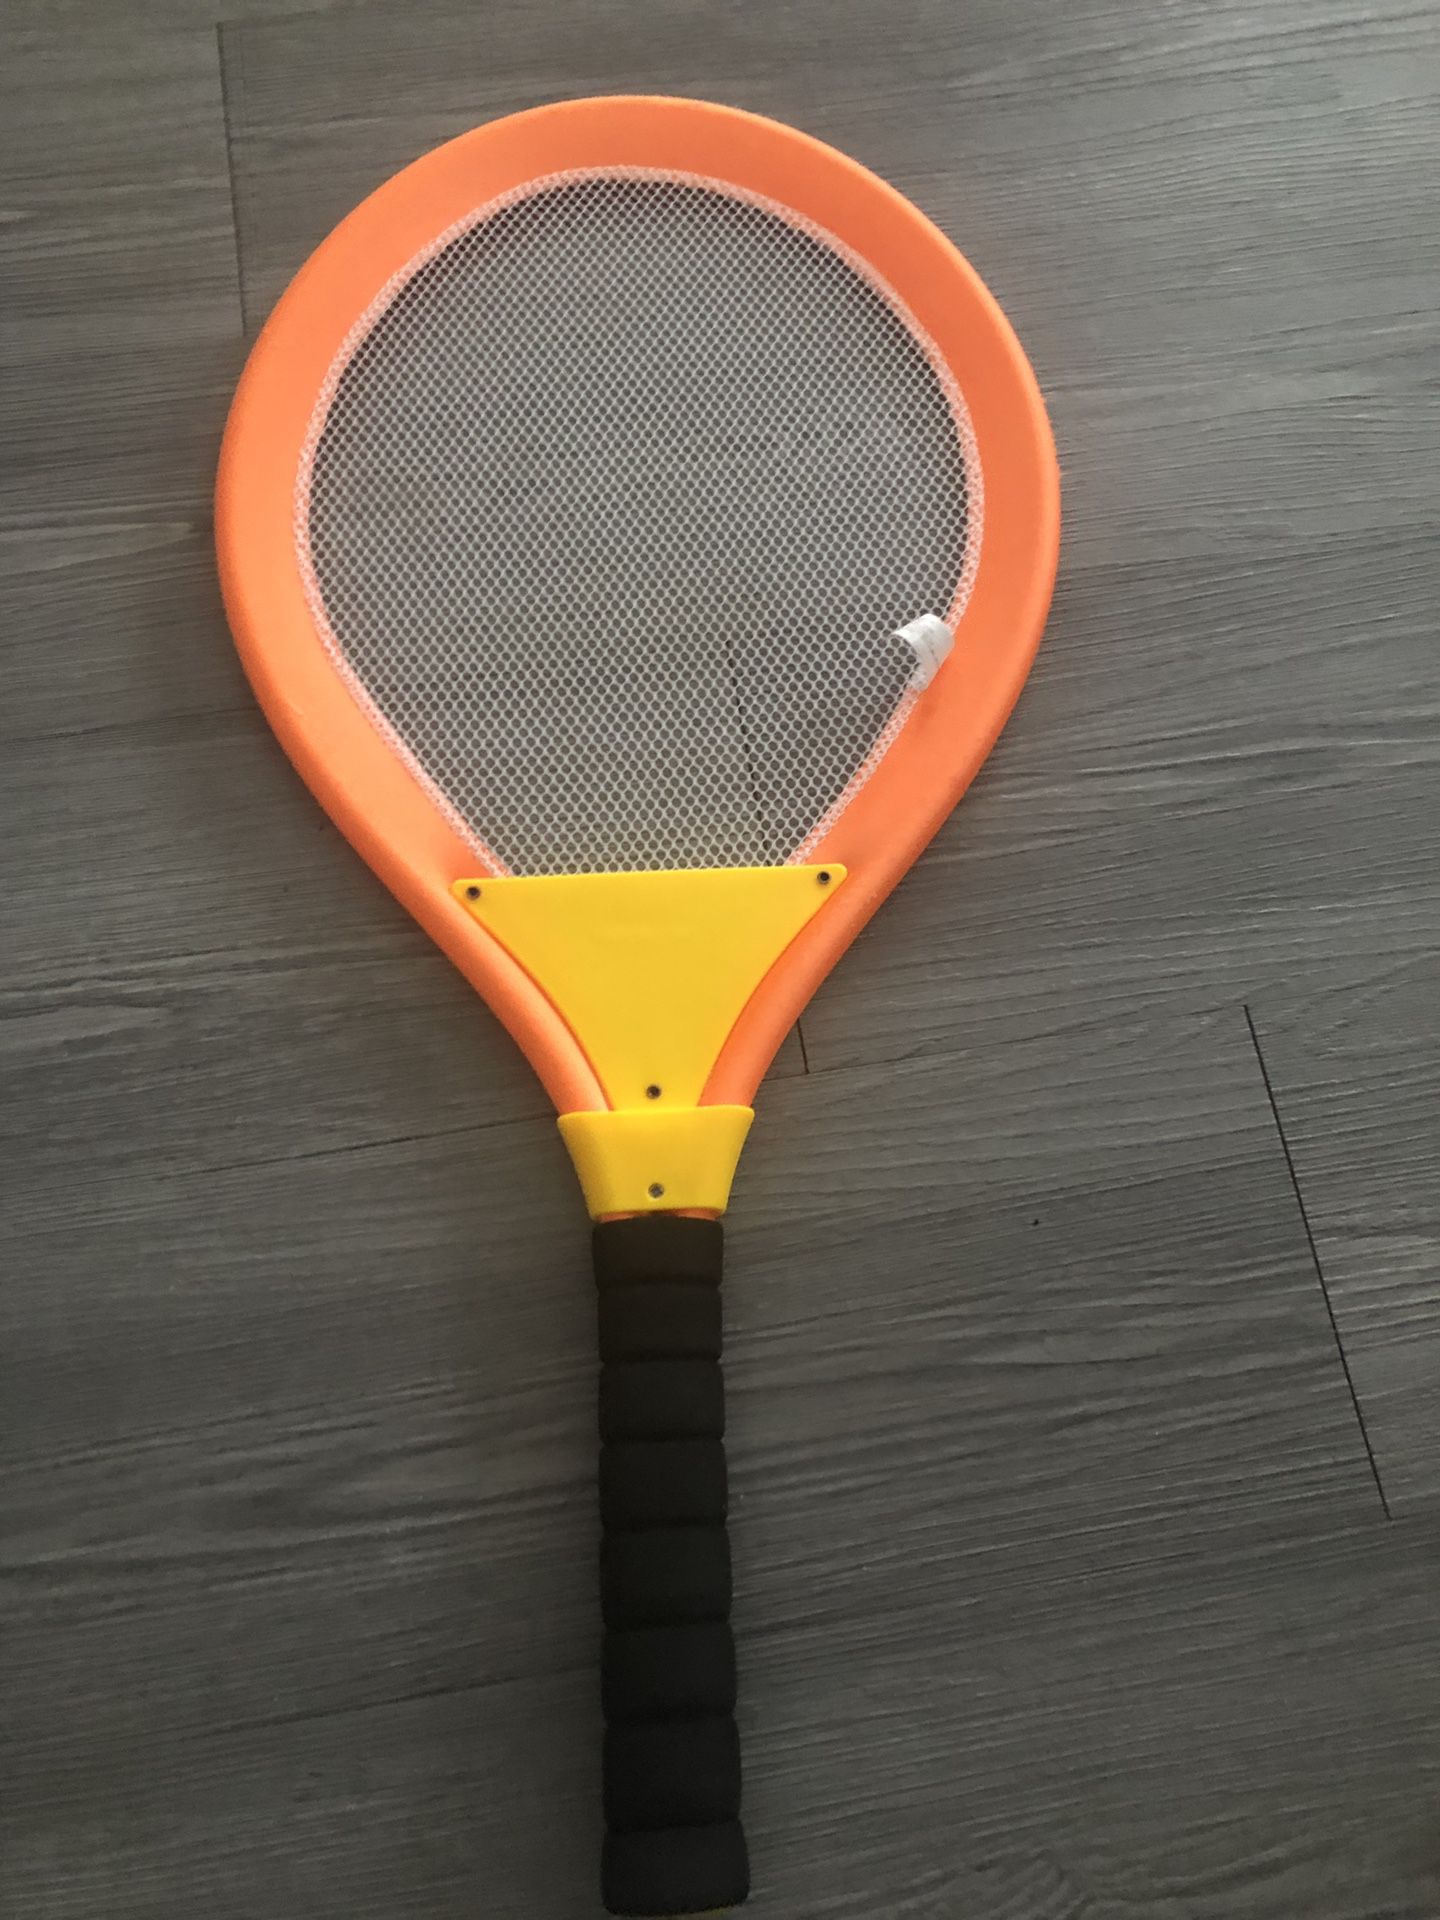 tennis racket for children